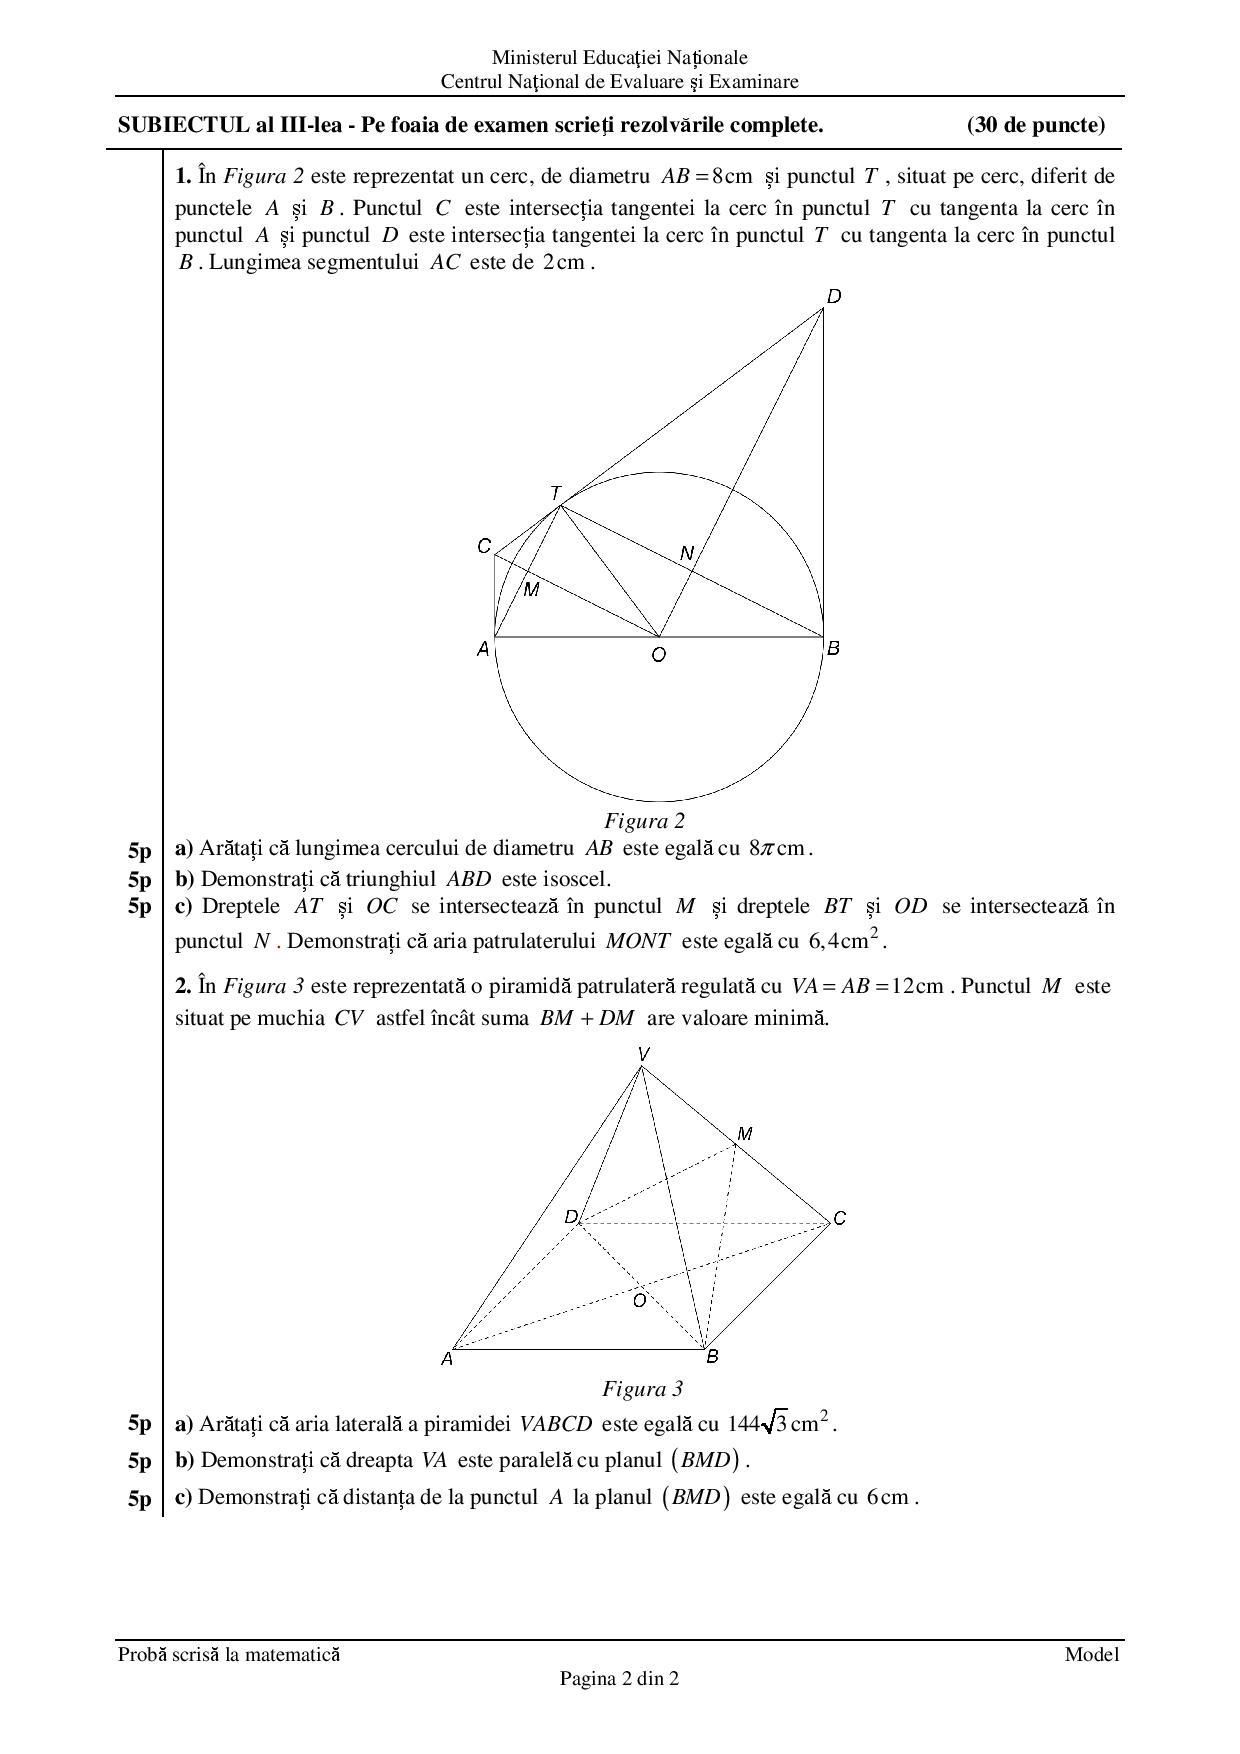 EN_matematica_2020_var_model_LRO-page-002.jpg